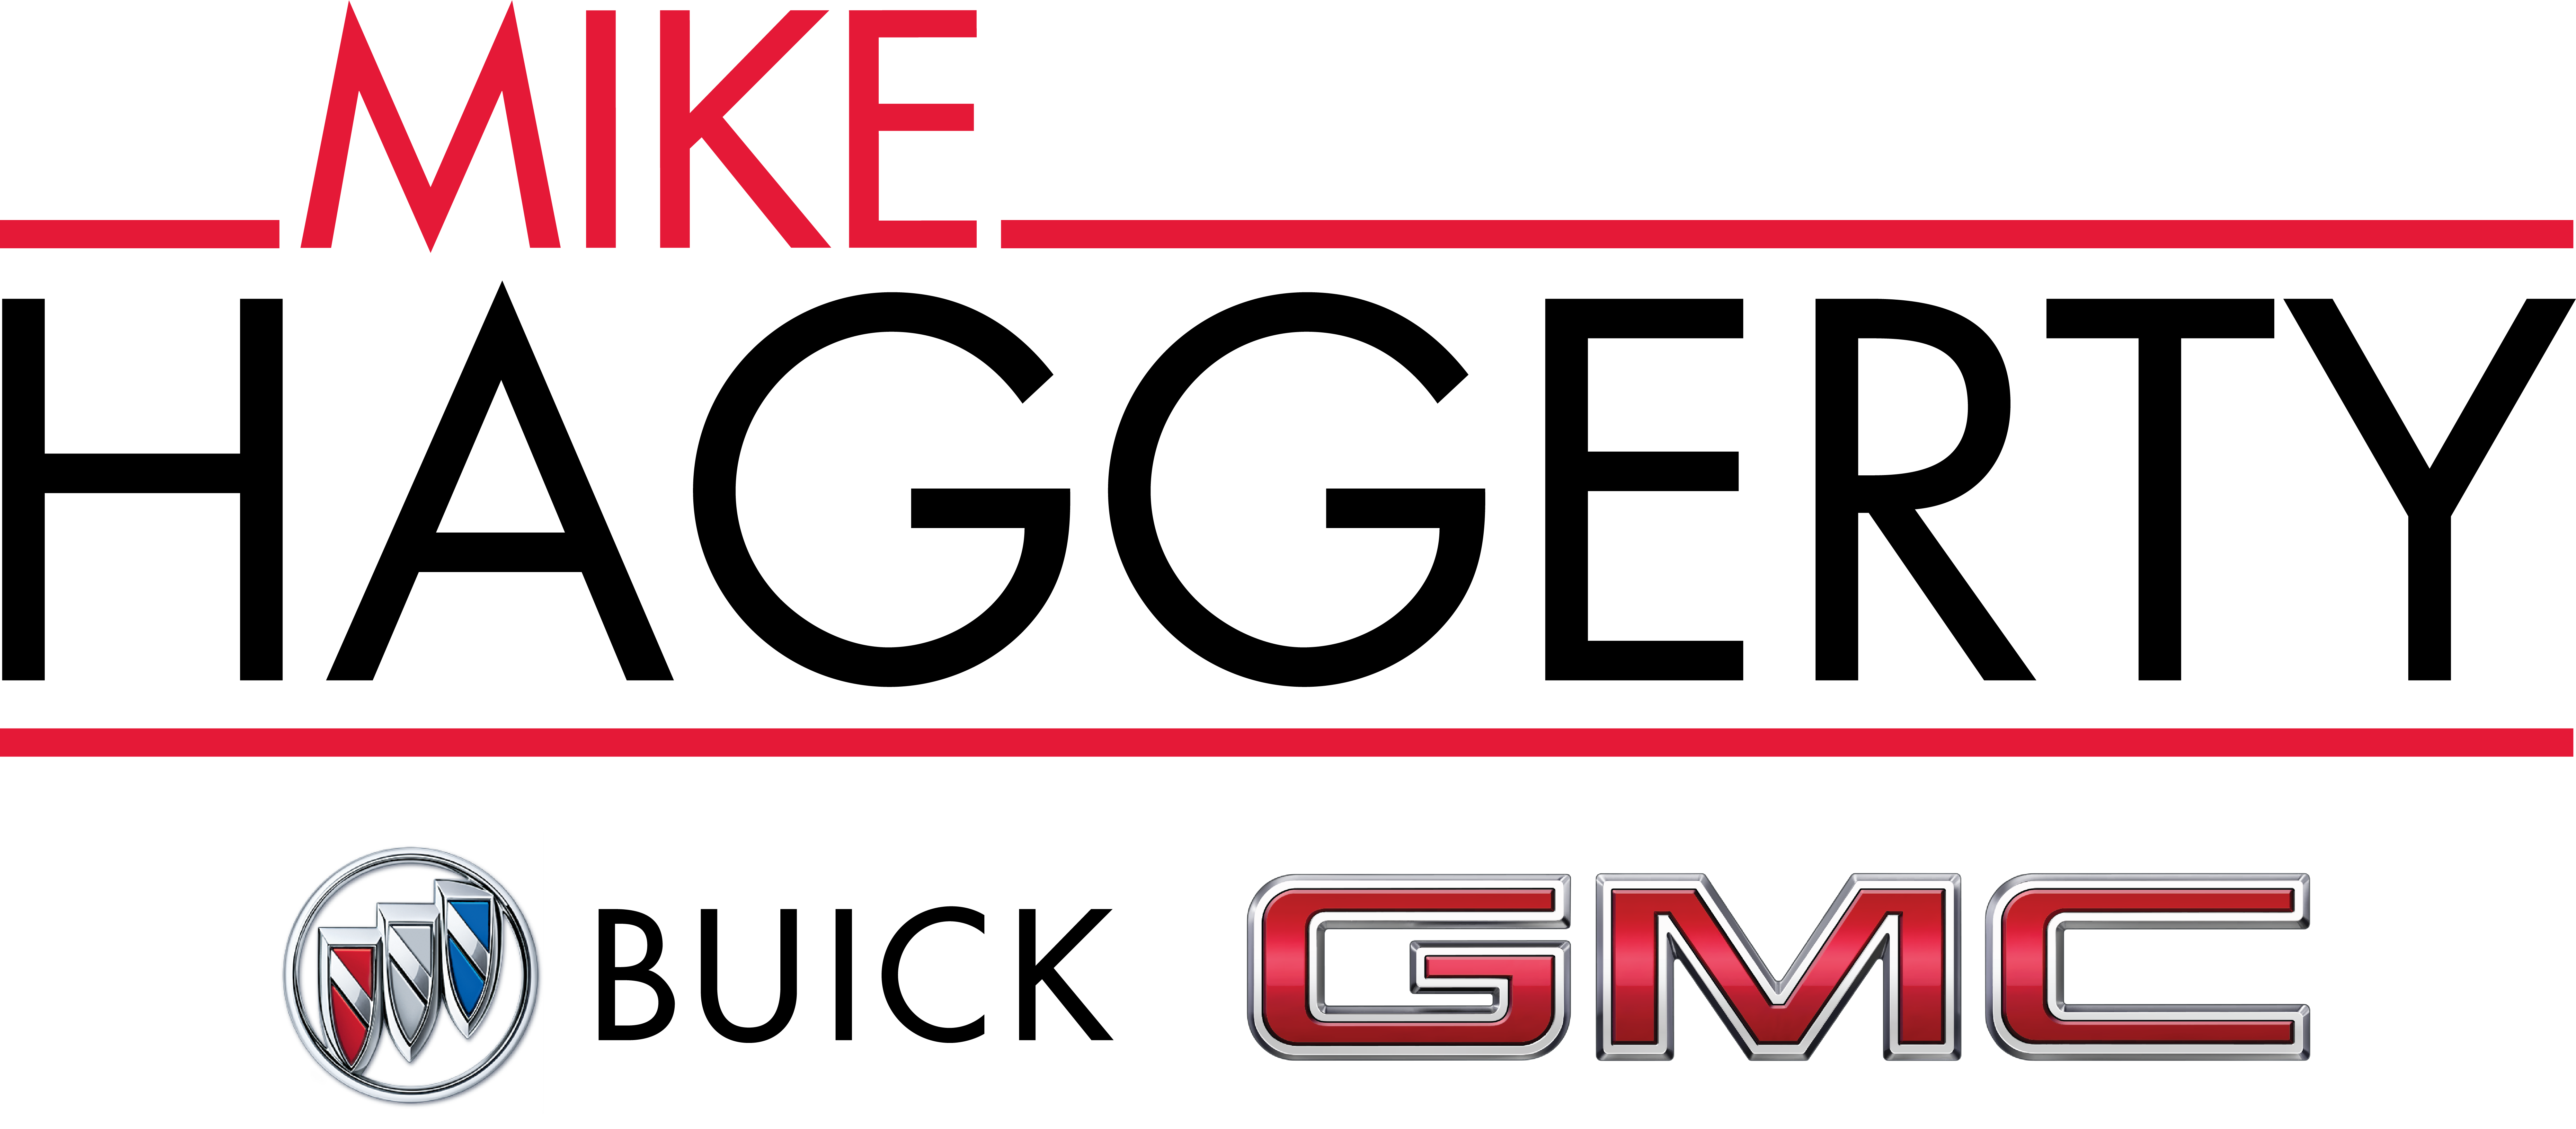 Mike Haggerty Buick GMC